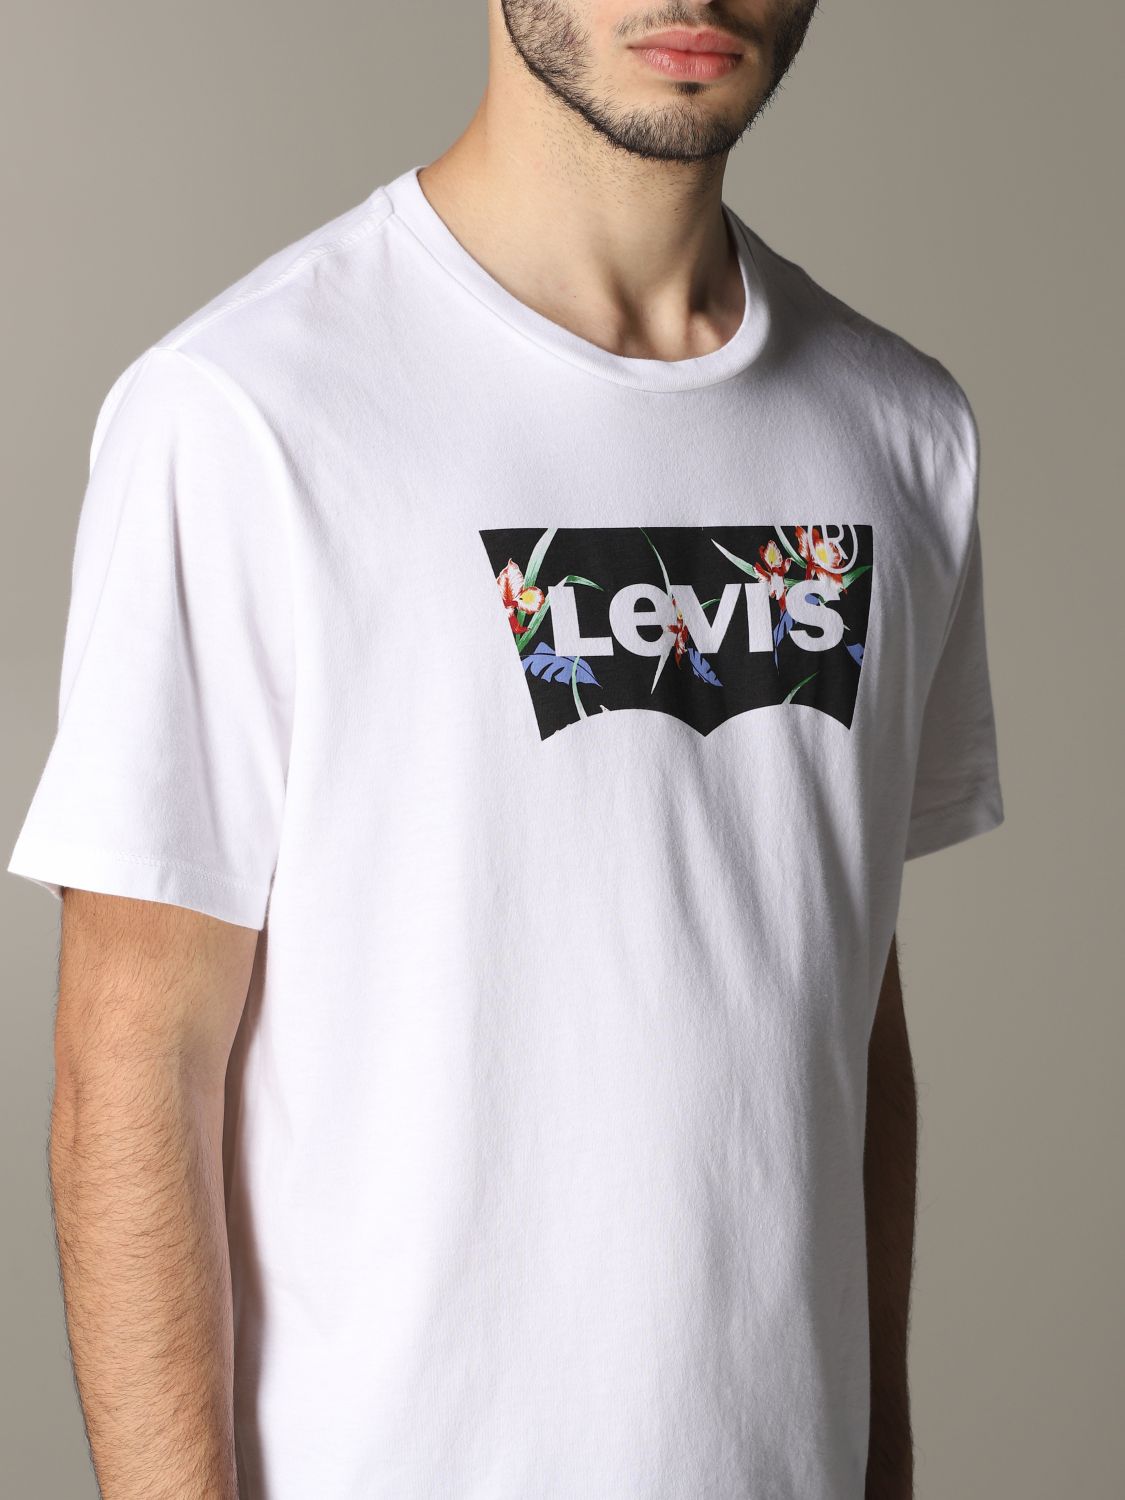 levis white shirt mens